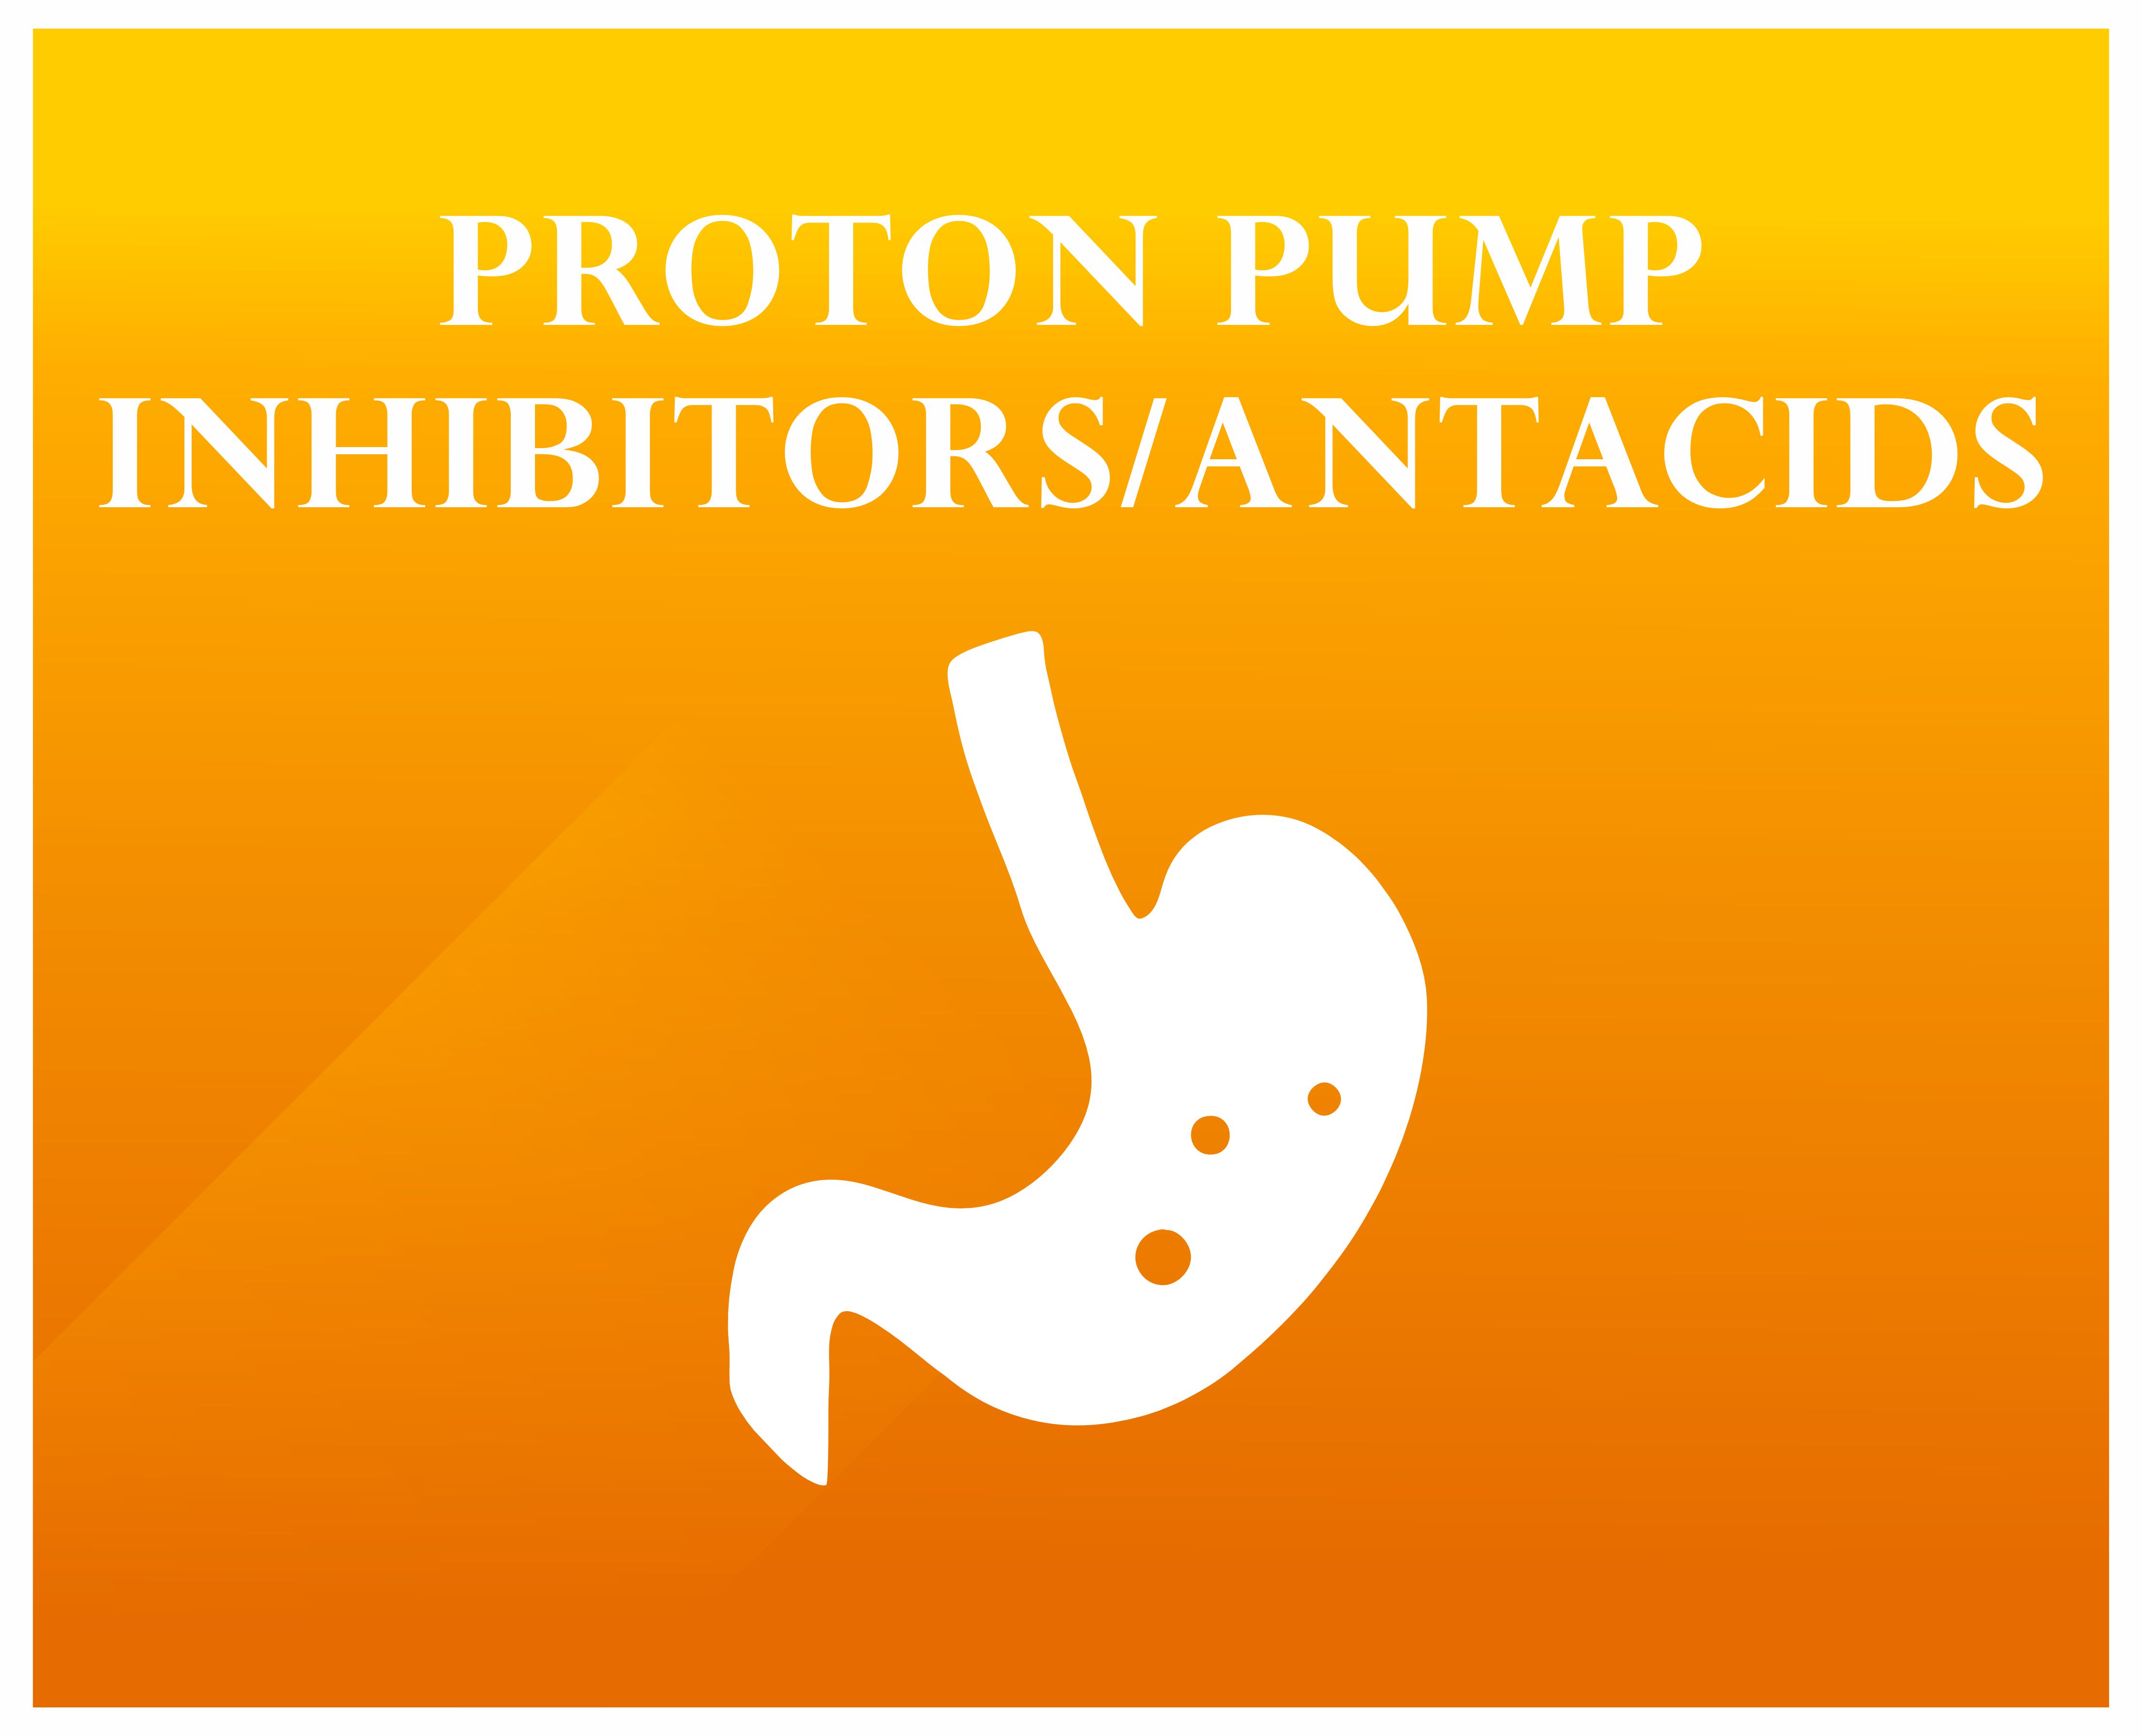 Proton Pump Inhibitors/ Antacids